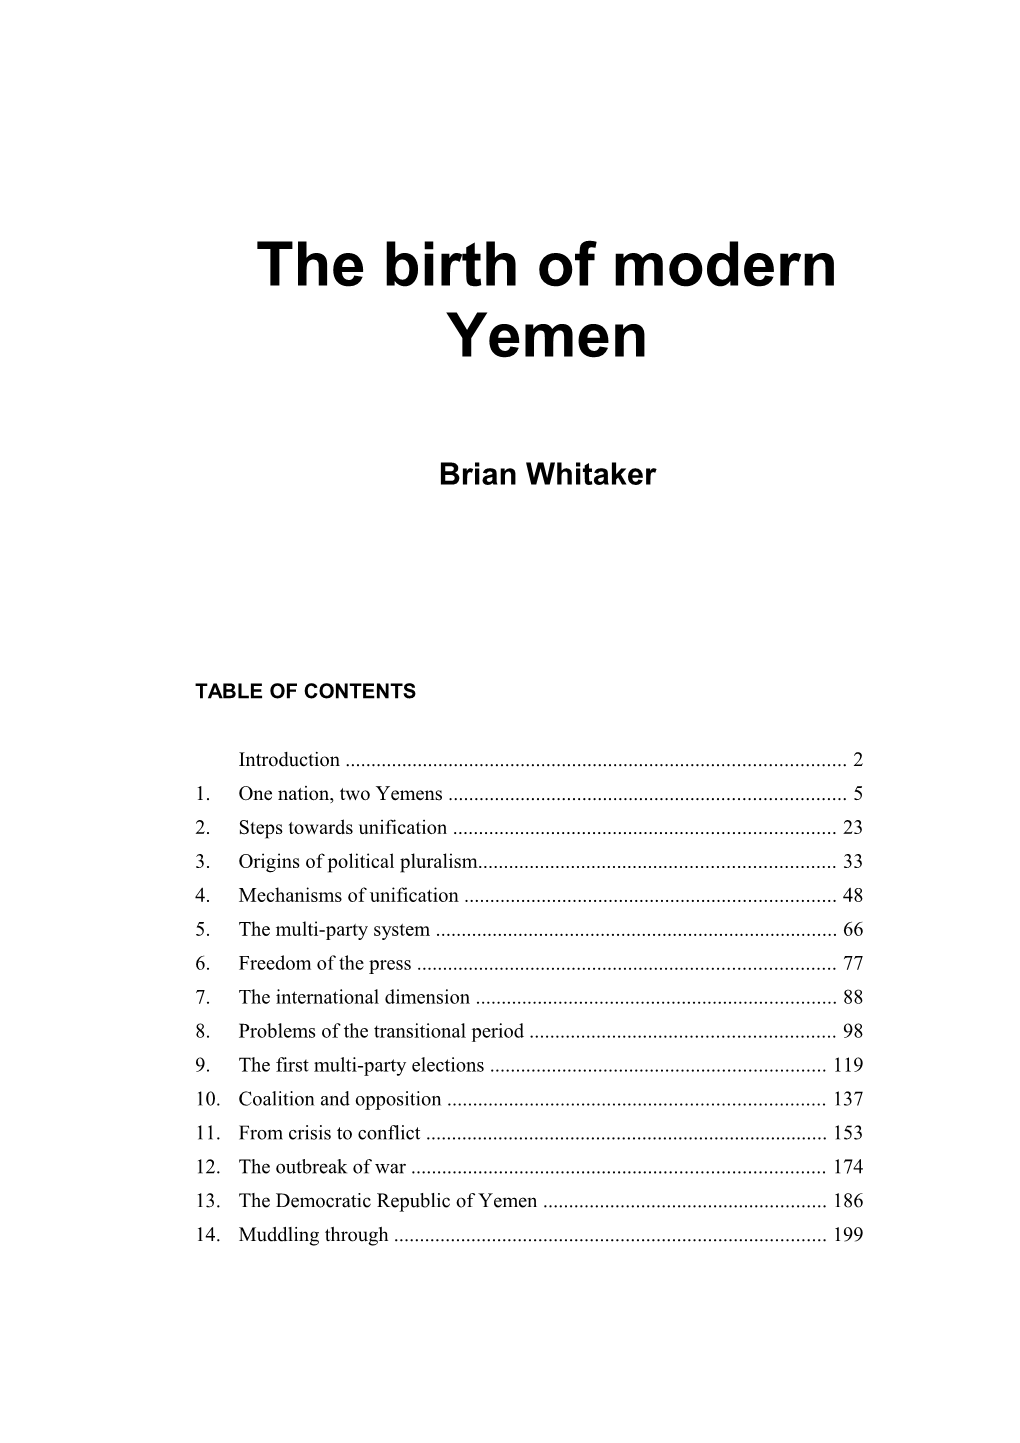 The Birth of Modern Yemen